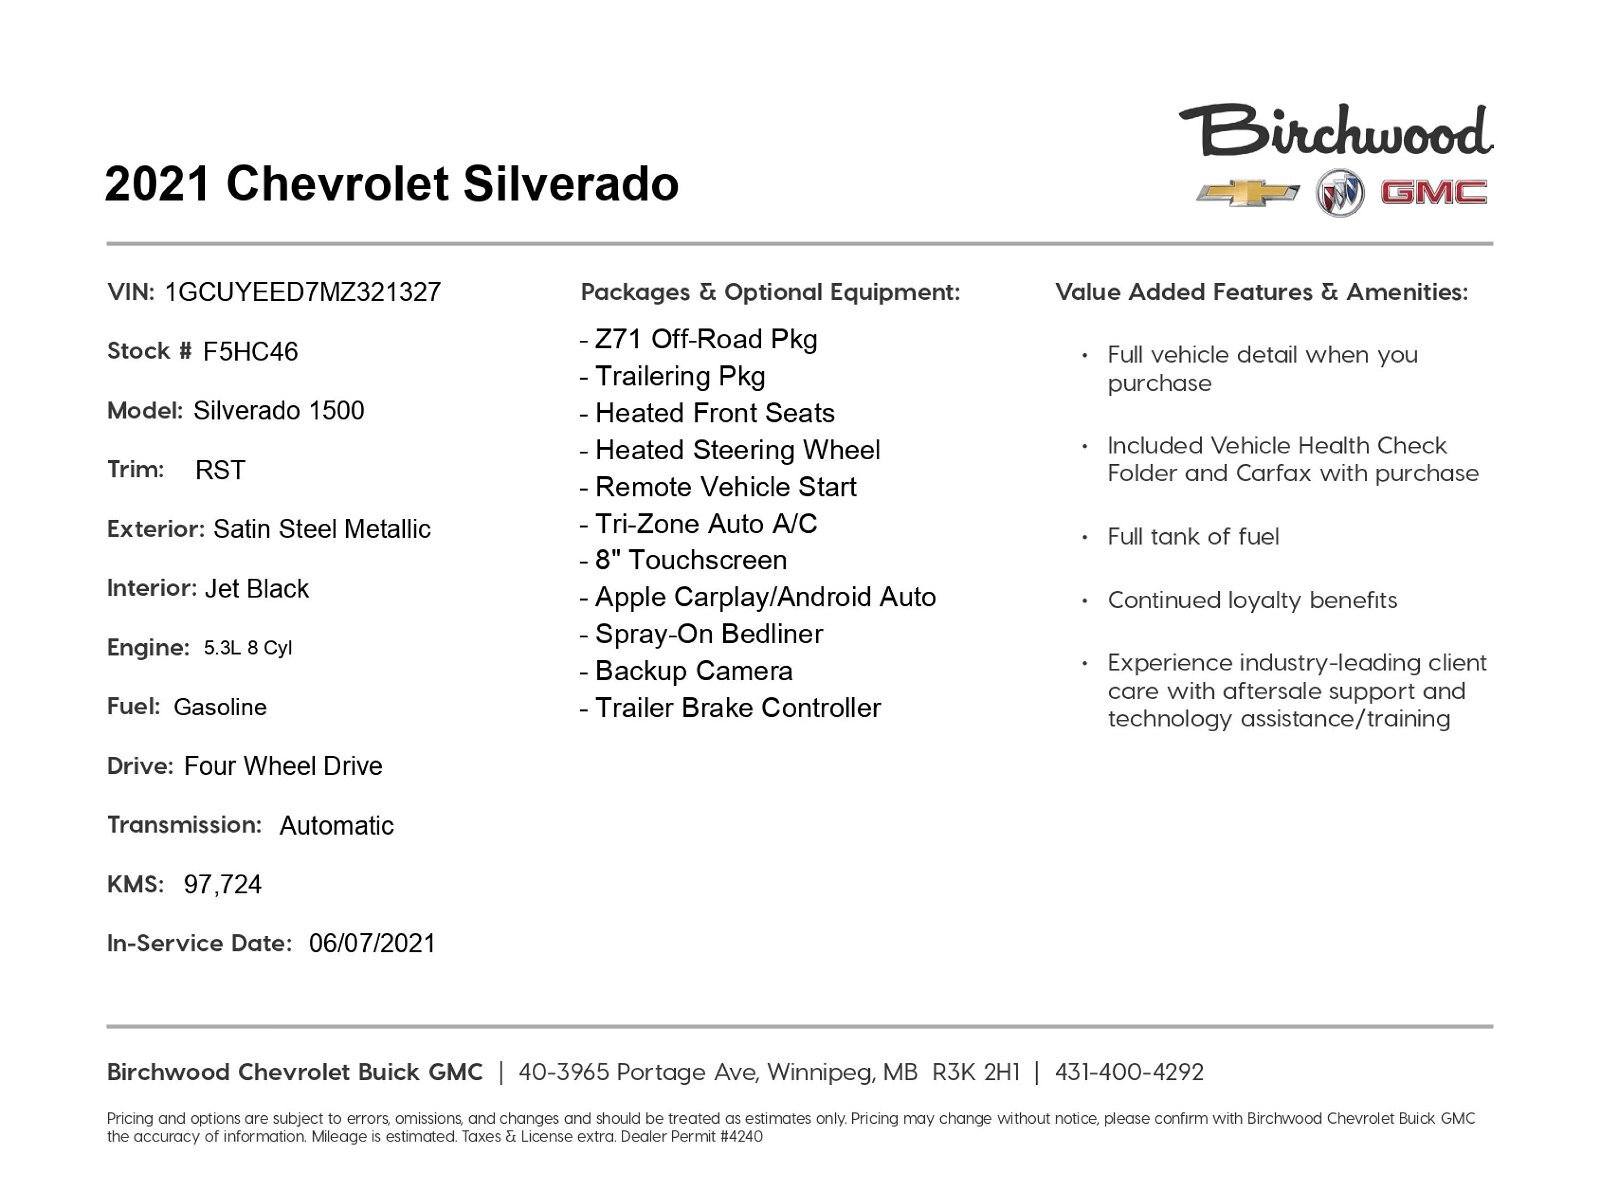 2021 Chevrolet Silverado 1500 RST 2-year Maintenance Free!